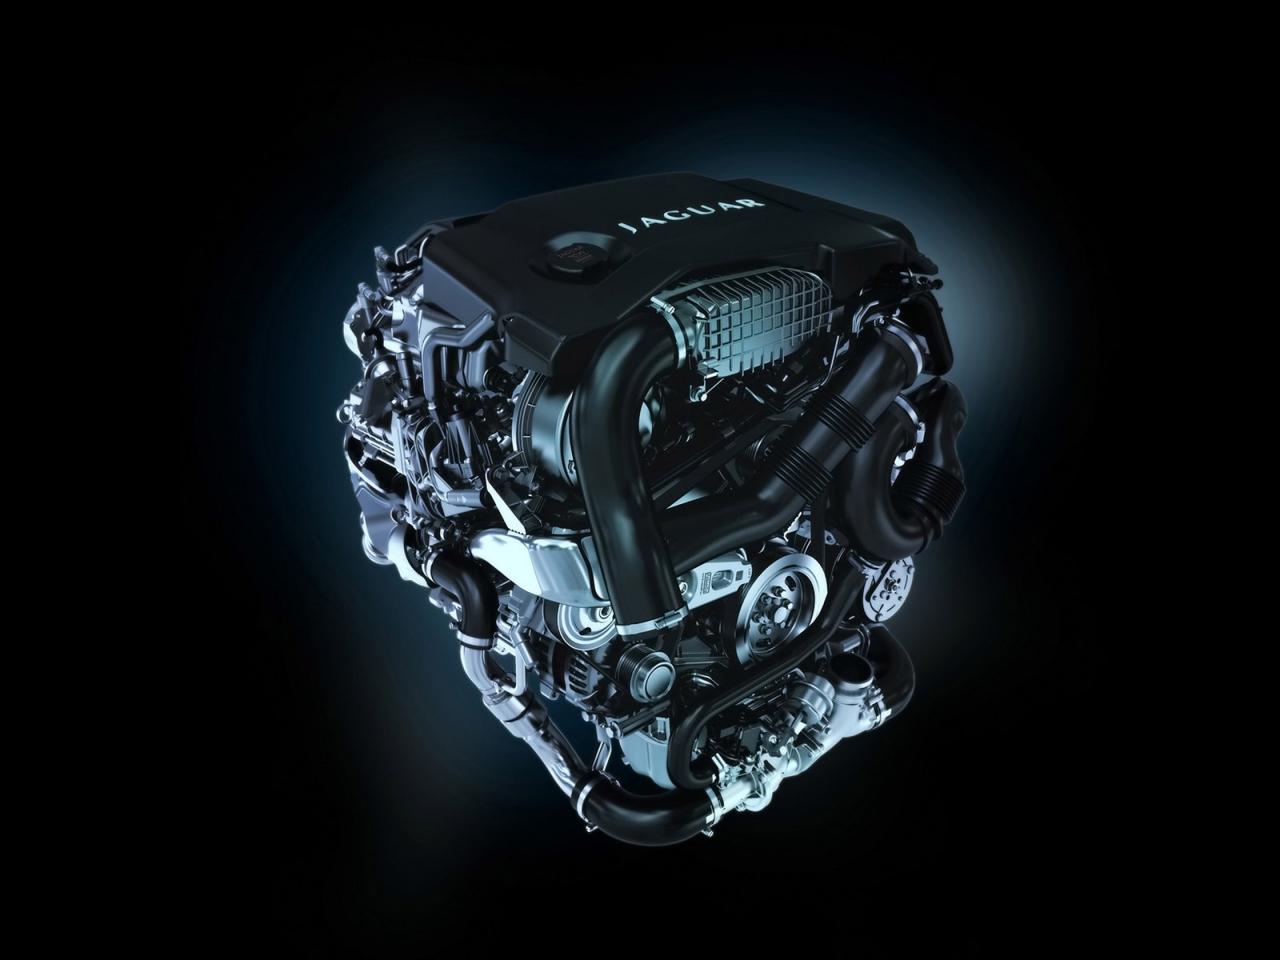 Jaguar XF Diesel S Engine for 1280 x 960 resolution